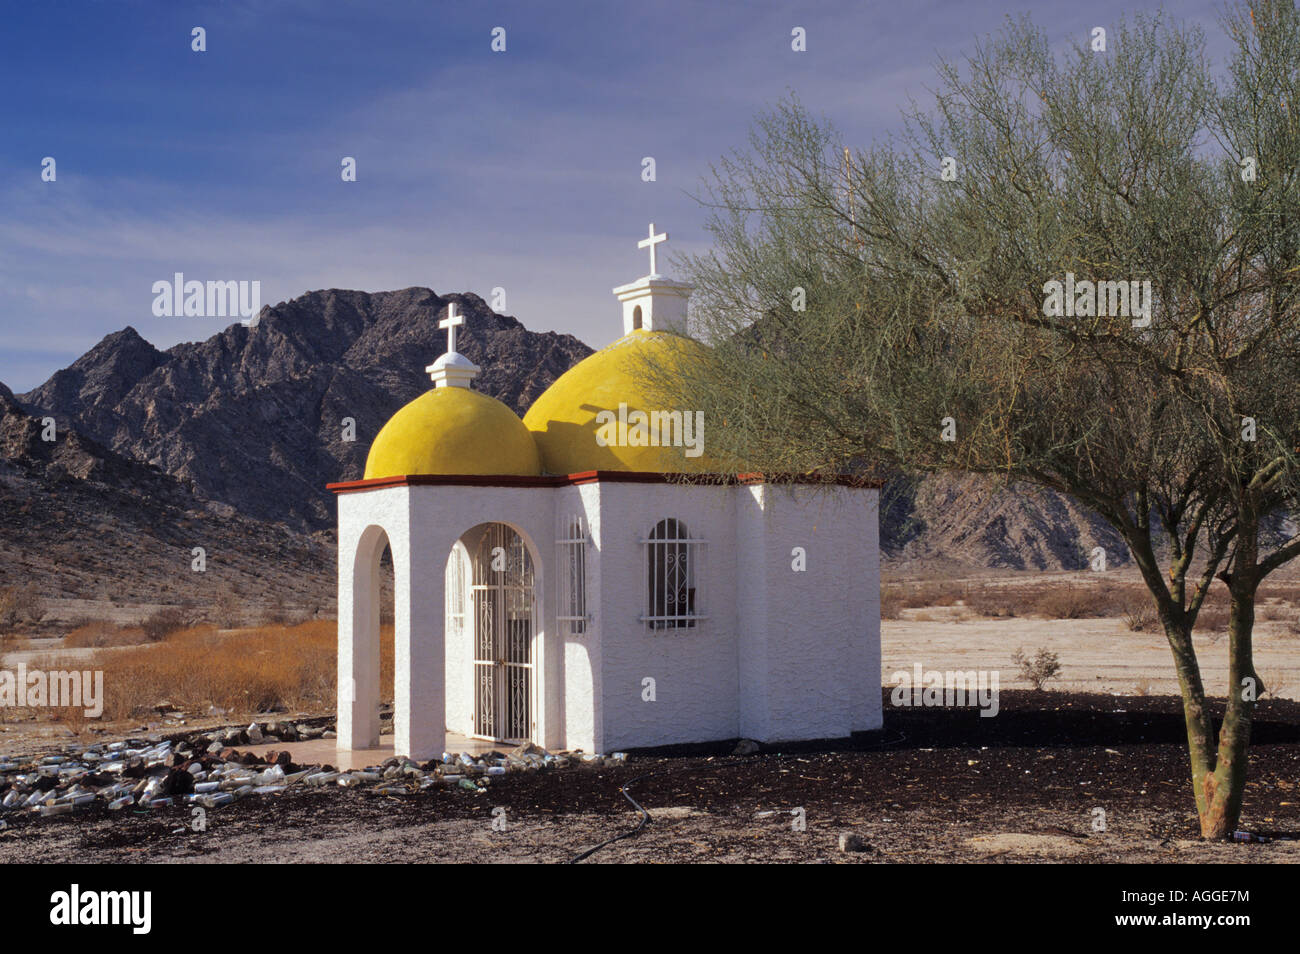 Am Straßenrand Kapelle in Sonora-Wüste, Mexiko Stockfoto